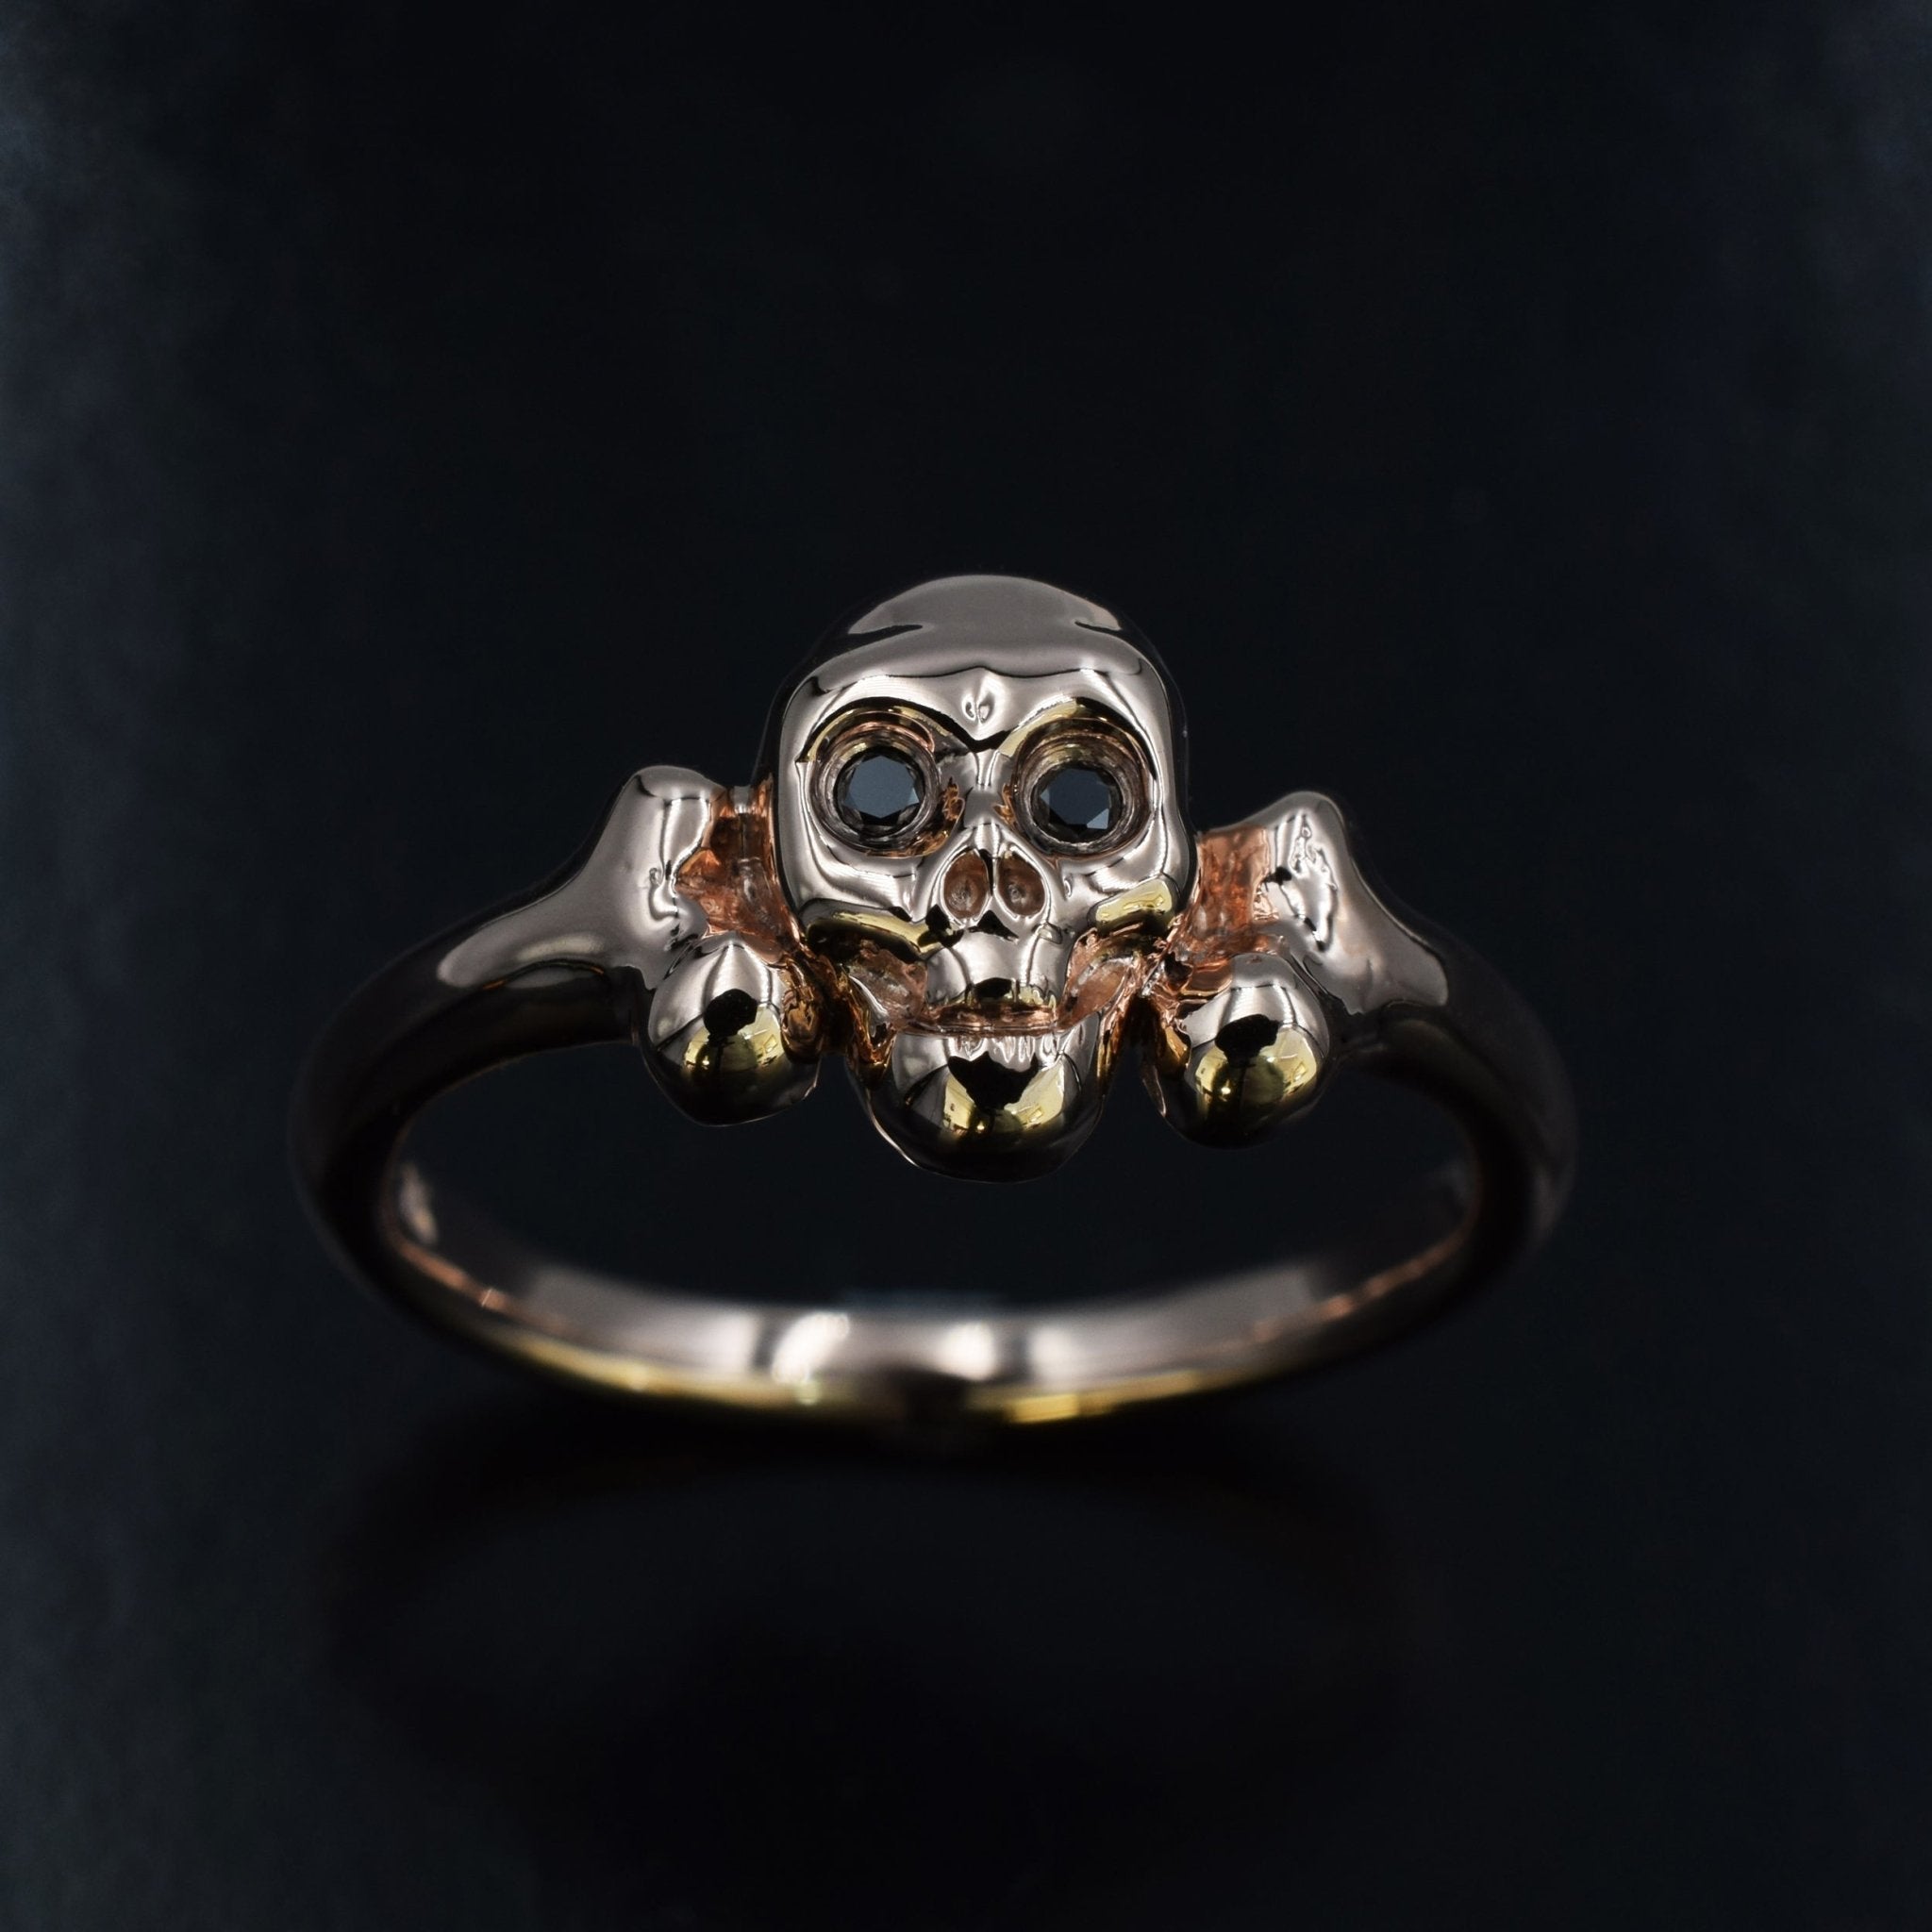 9ct rose gold skull ring with black diamond eyes - Scherman's - Other - Scherman's